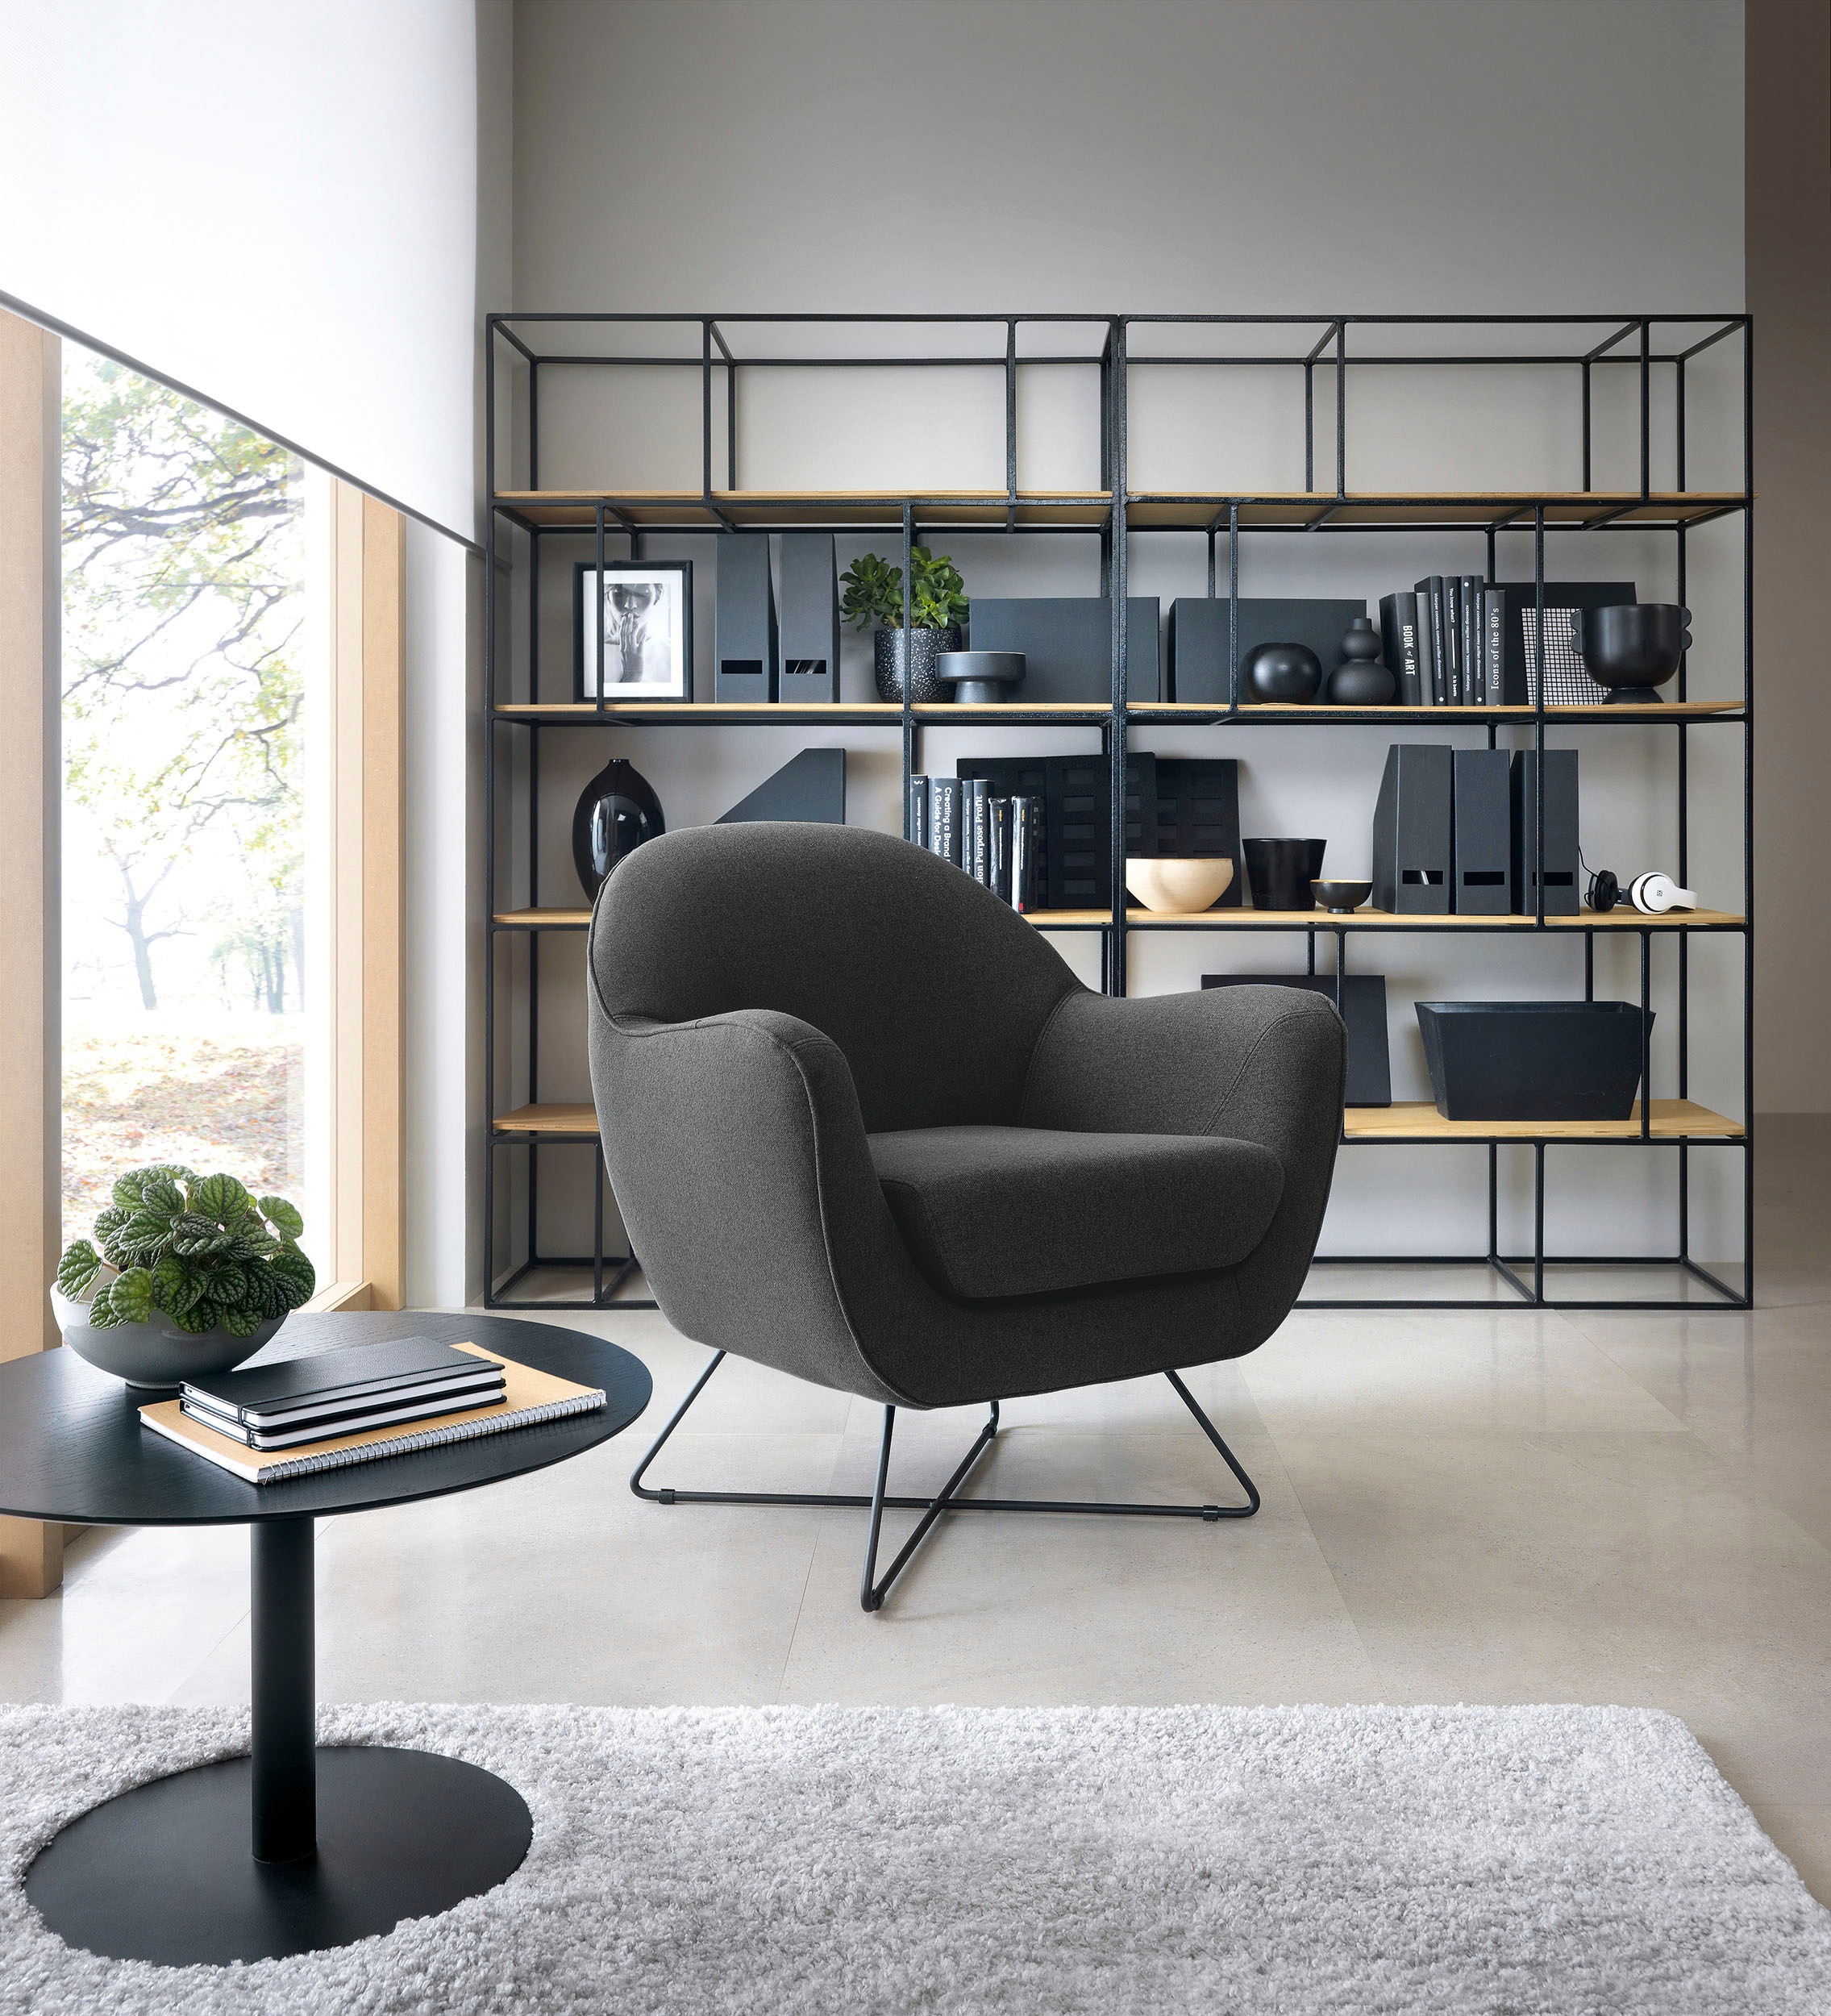 TRENDMANUFAKTUR Sessel »Evora«, in zeitlosem Stil mit modernem Metallgestell